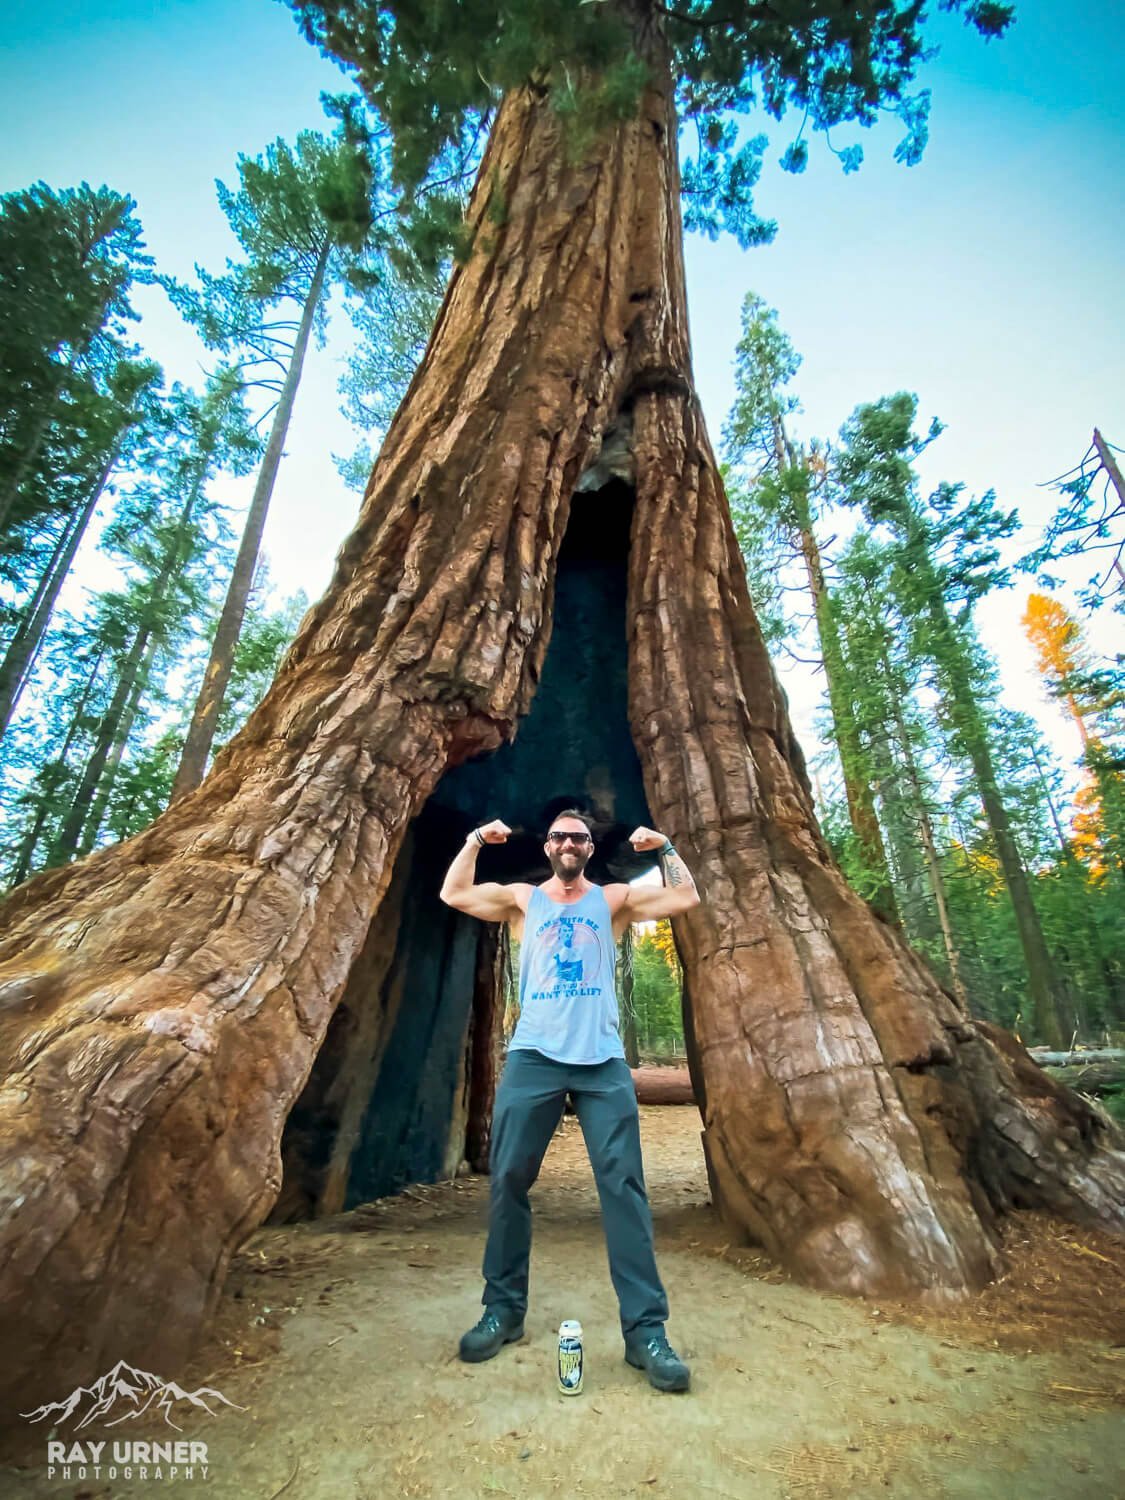 Mariposa-Grove-Giant-Sequoias-California-Tunnel-Tree-5.jpg